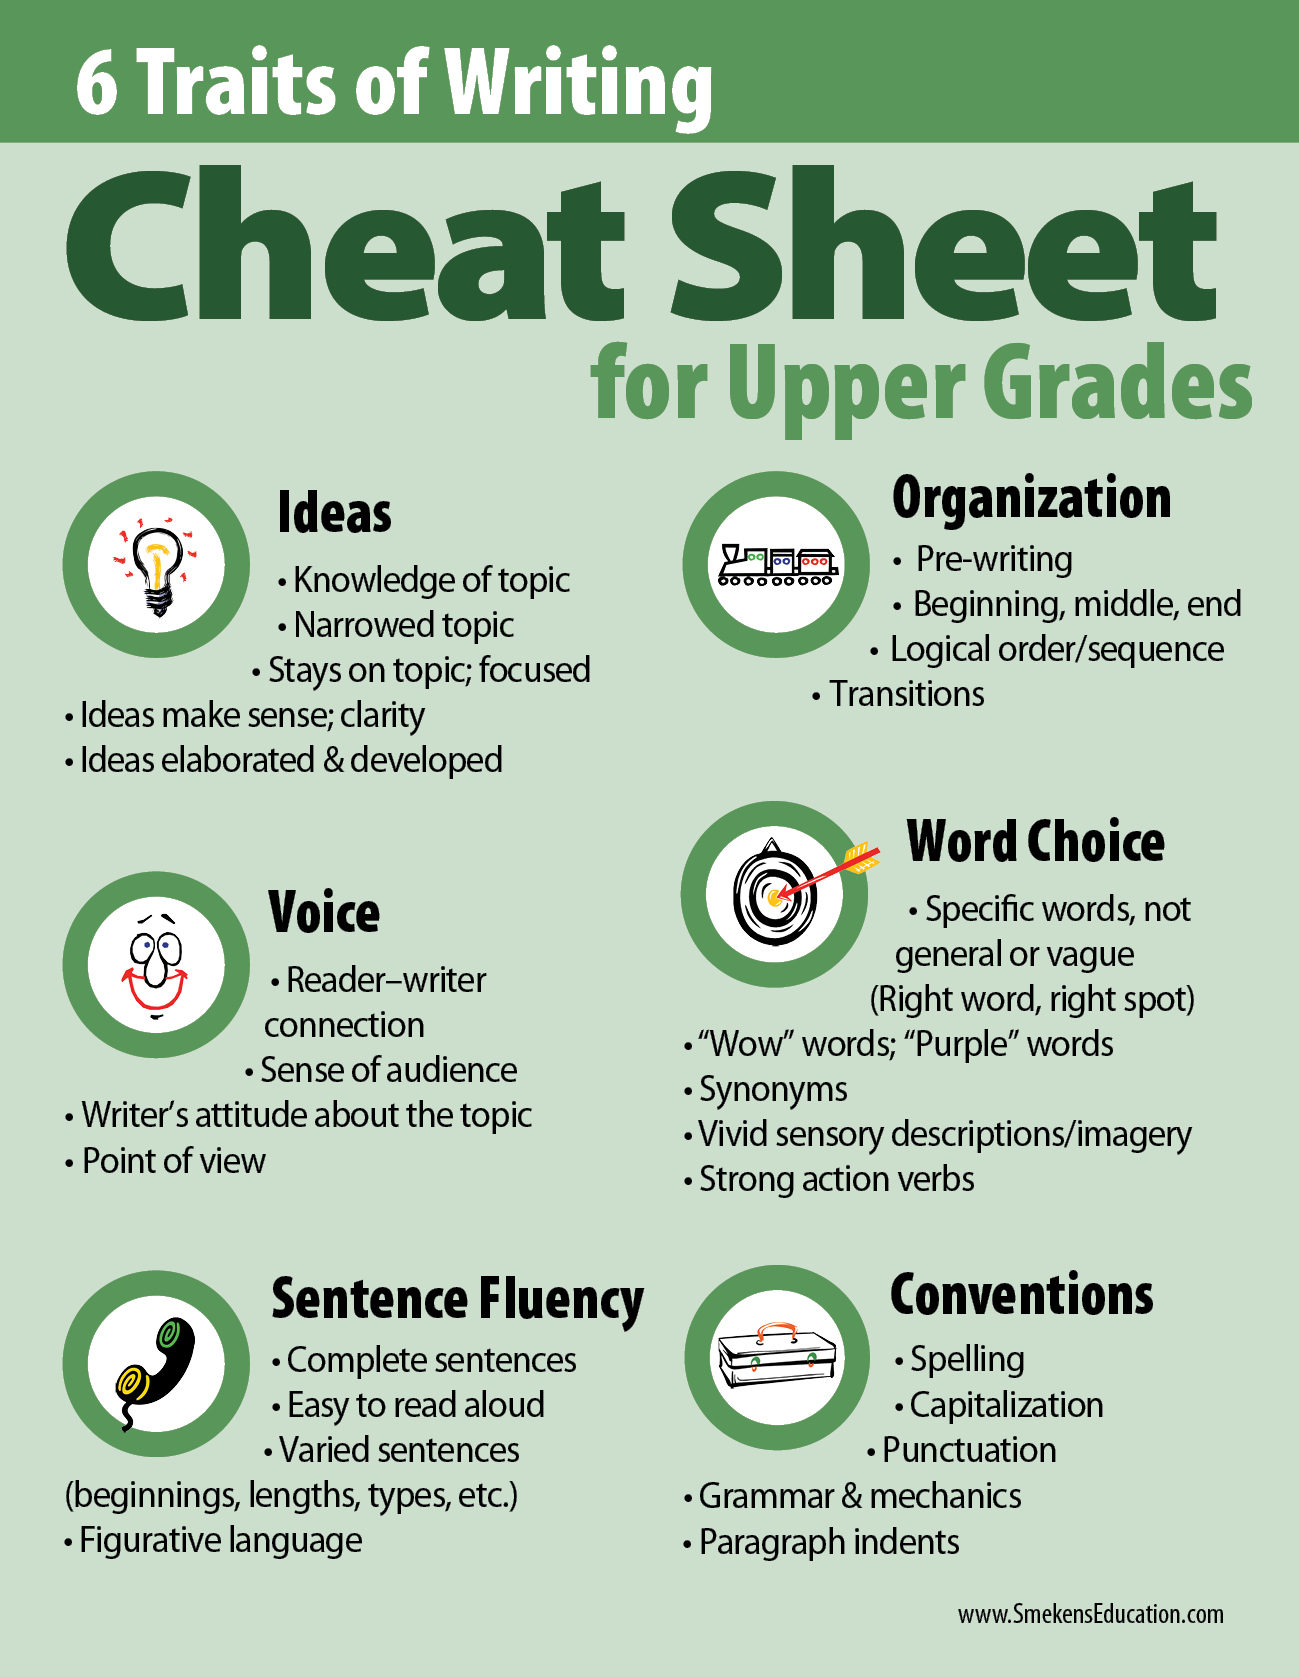 6 Traits of Writing Cheat Sheet: Upper Grades